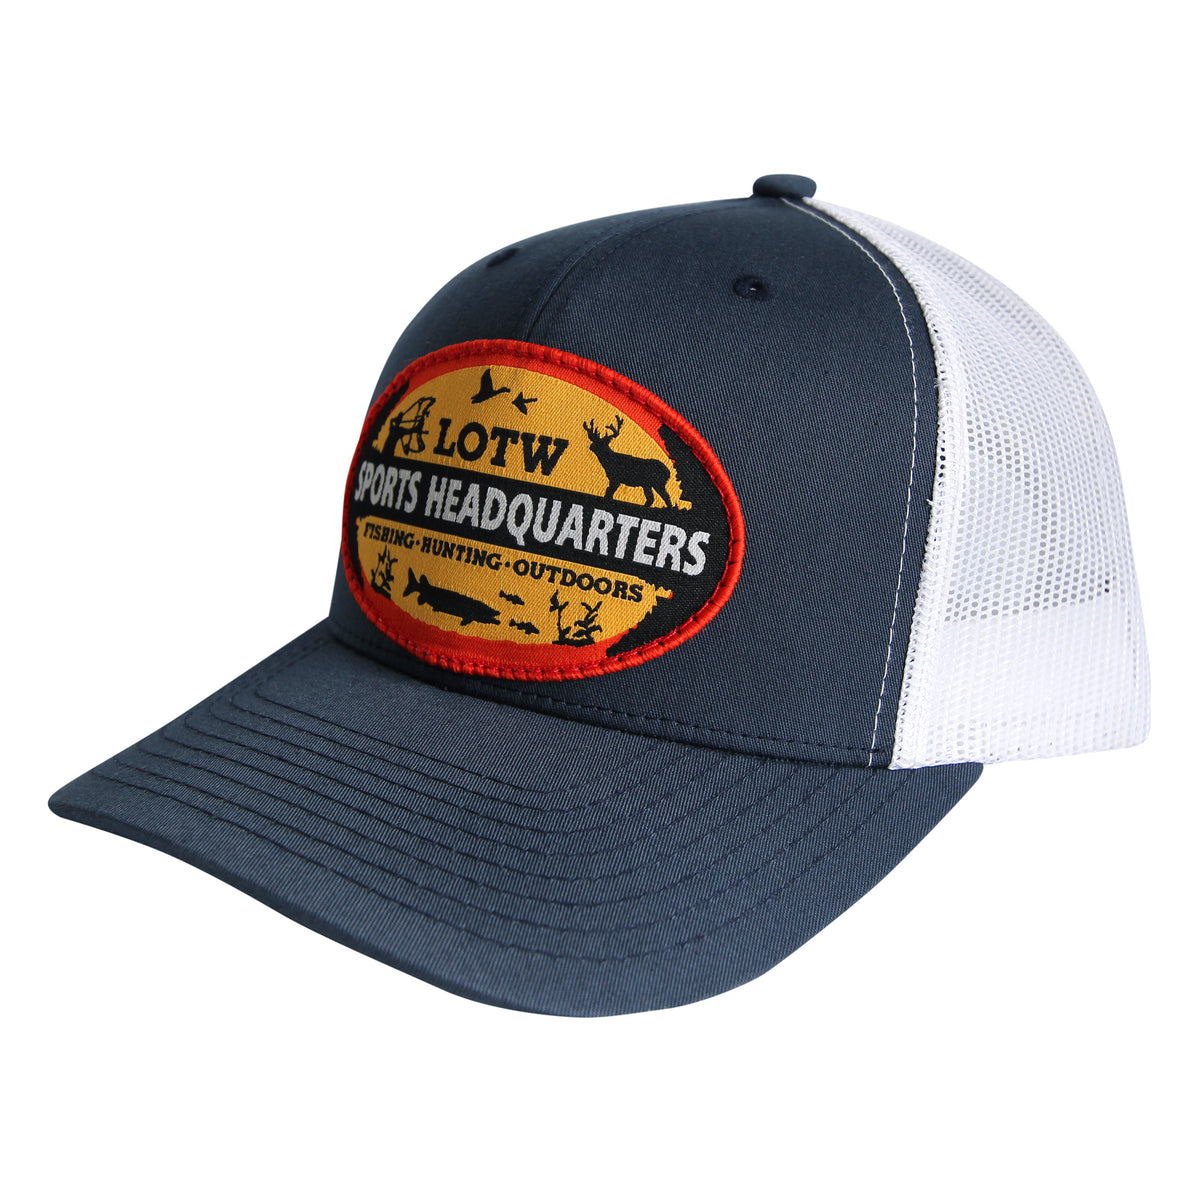 LOTW Sports Headquarters Retro Snapback Trucker Hats - Blue/White